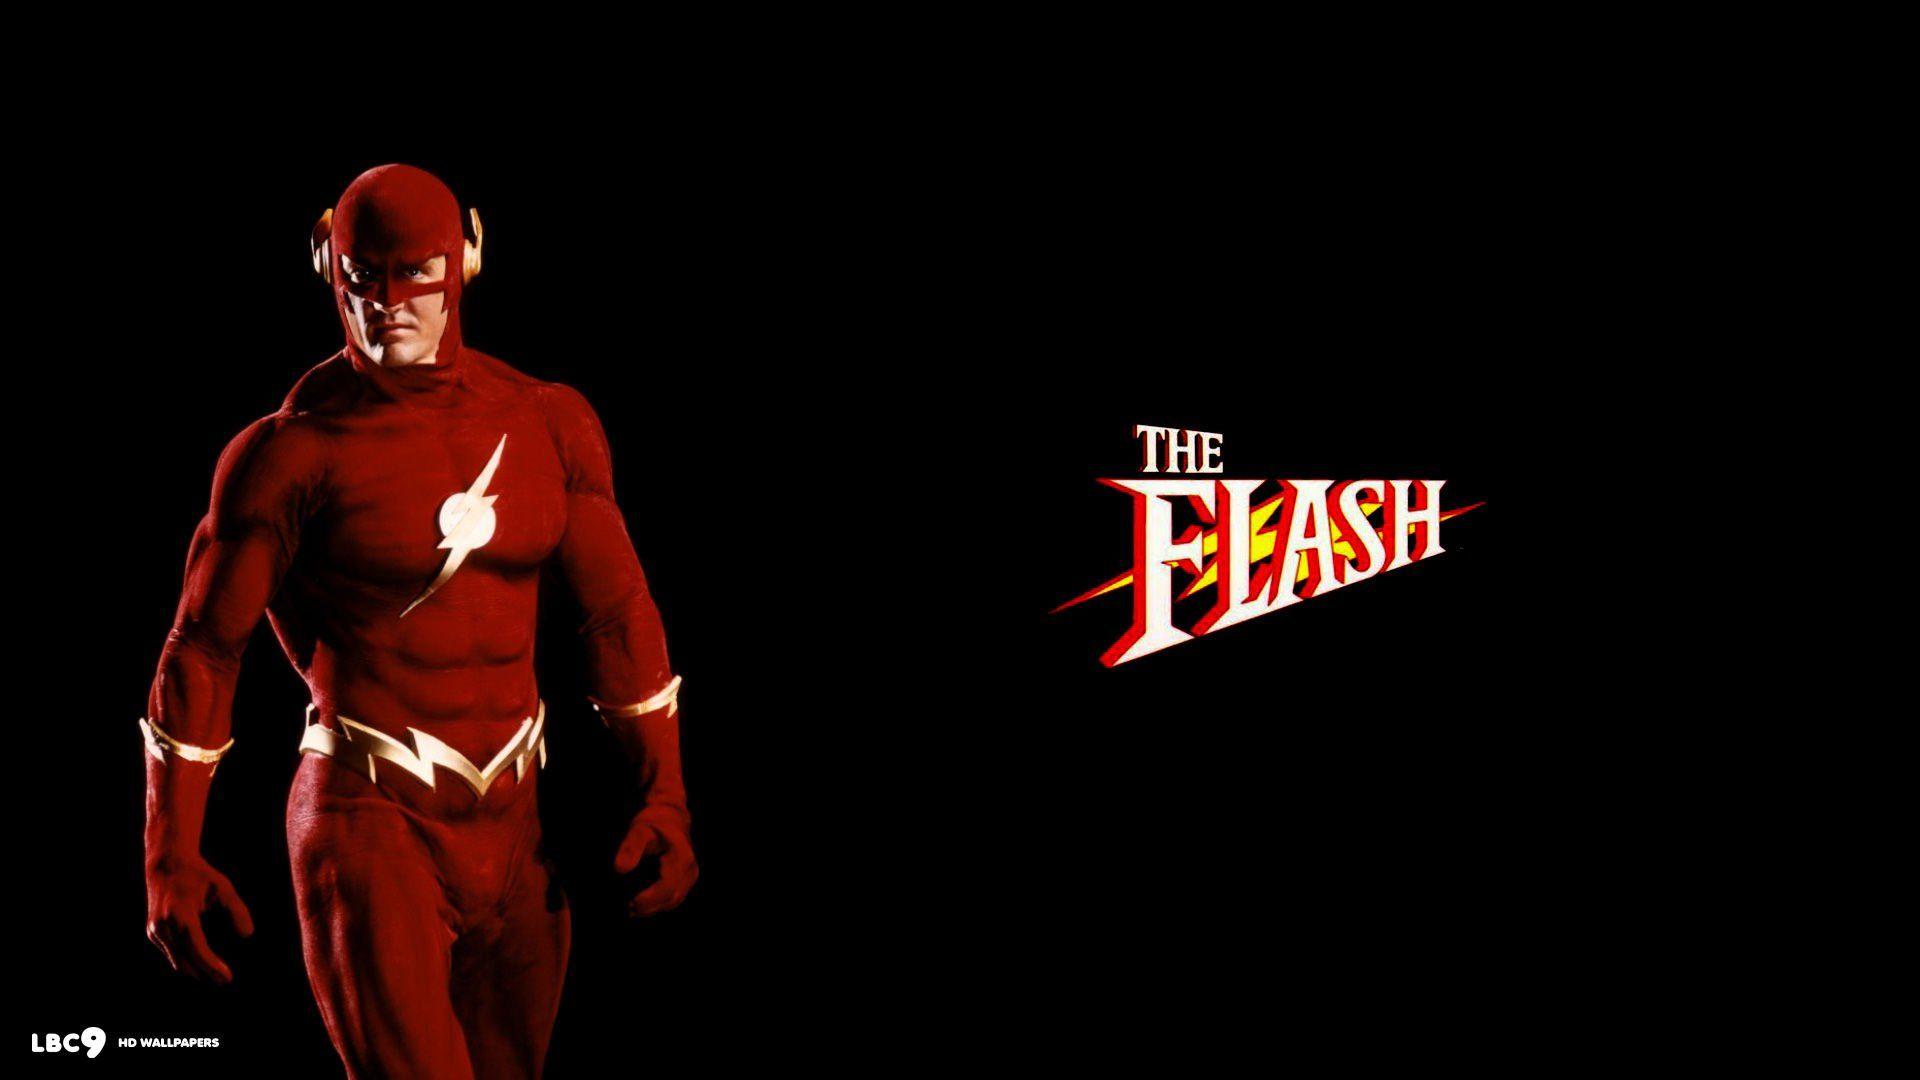 THE FLASH Superhero Drama Action Series Mystery Sci Fi Dc Comics